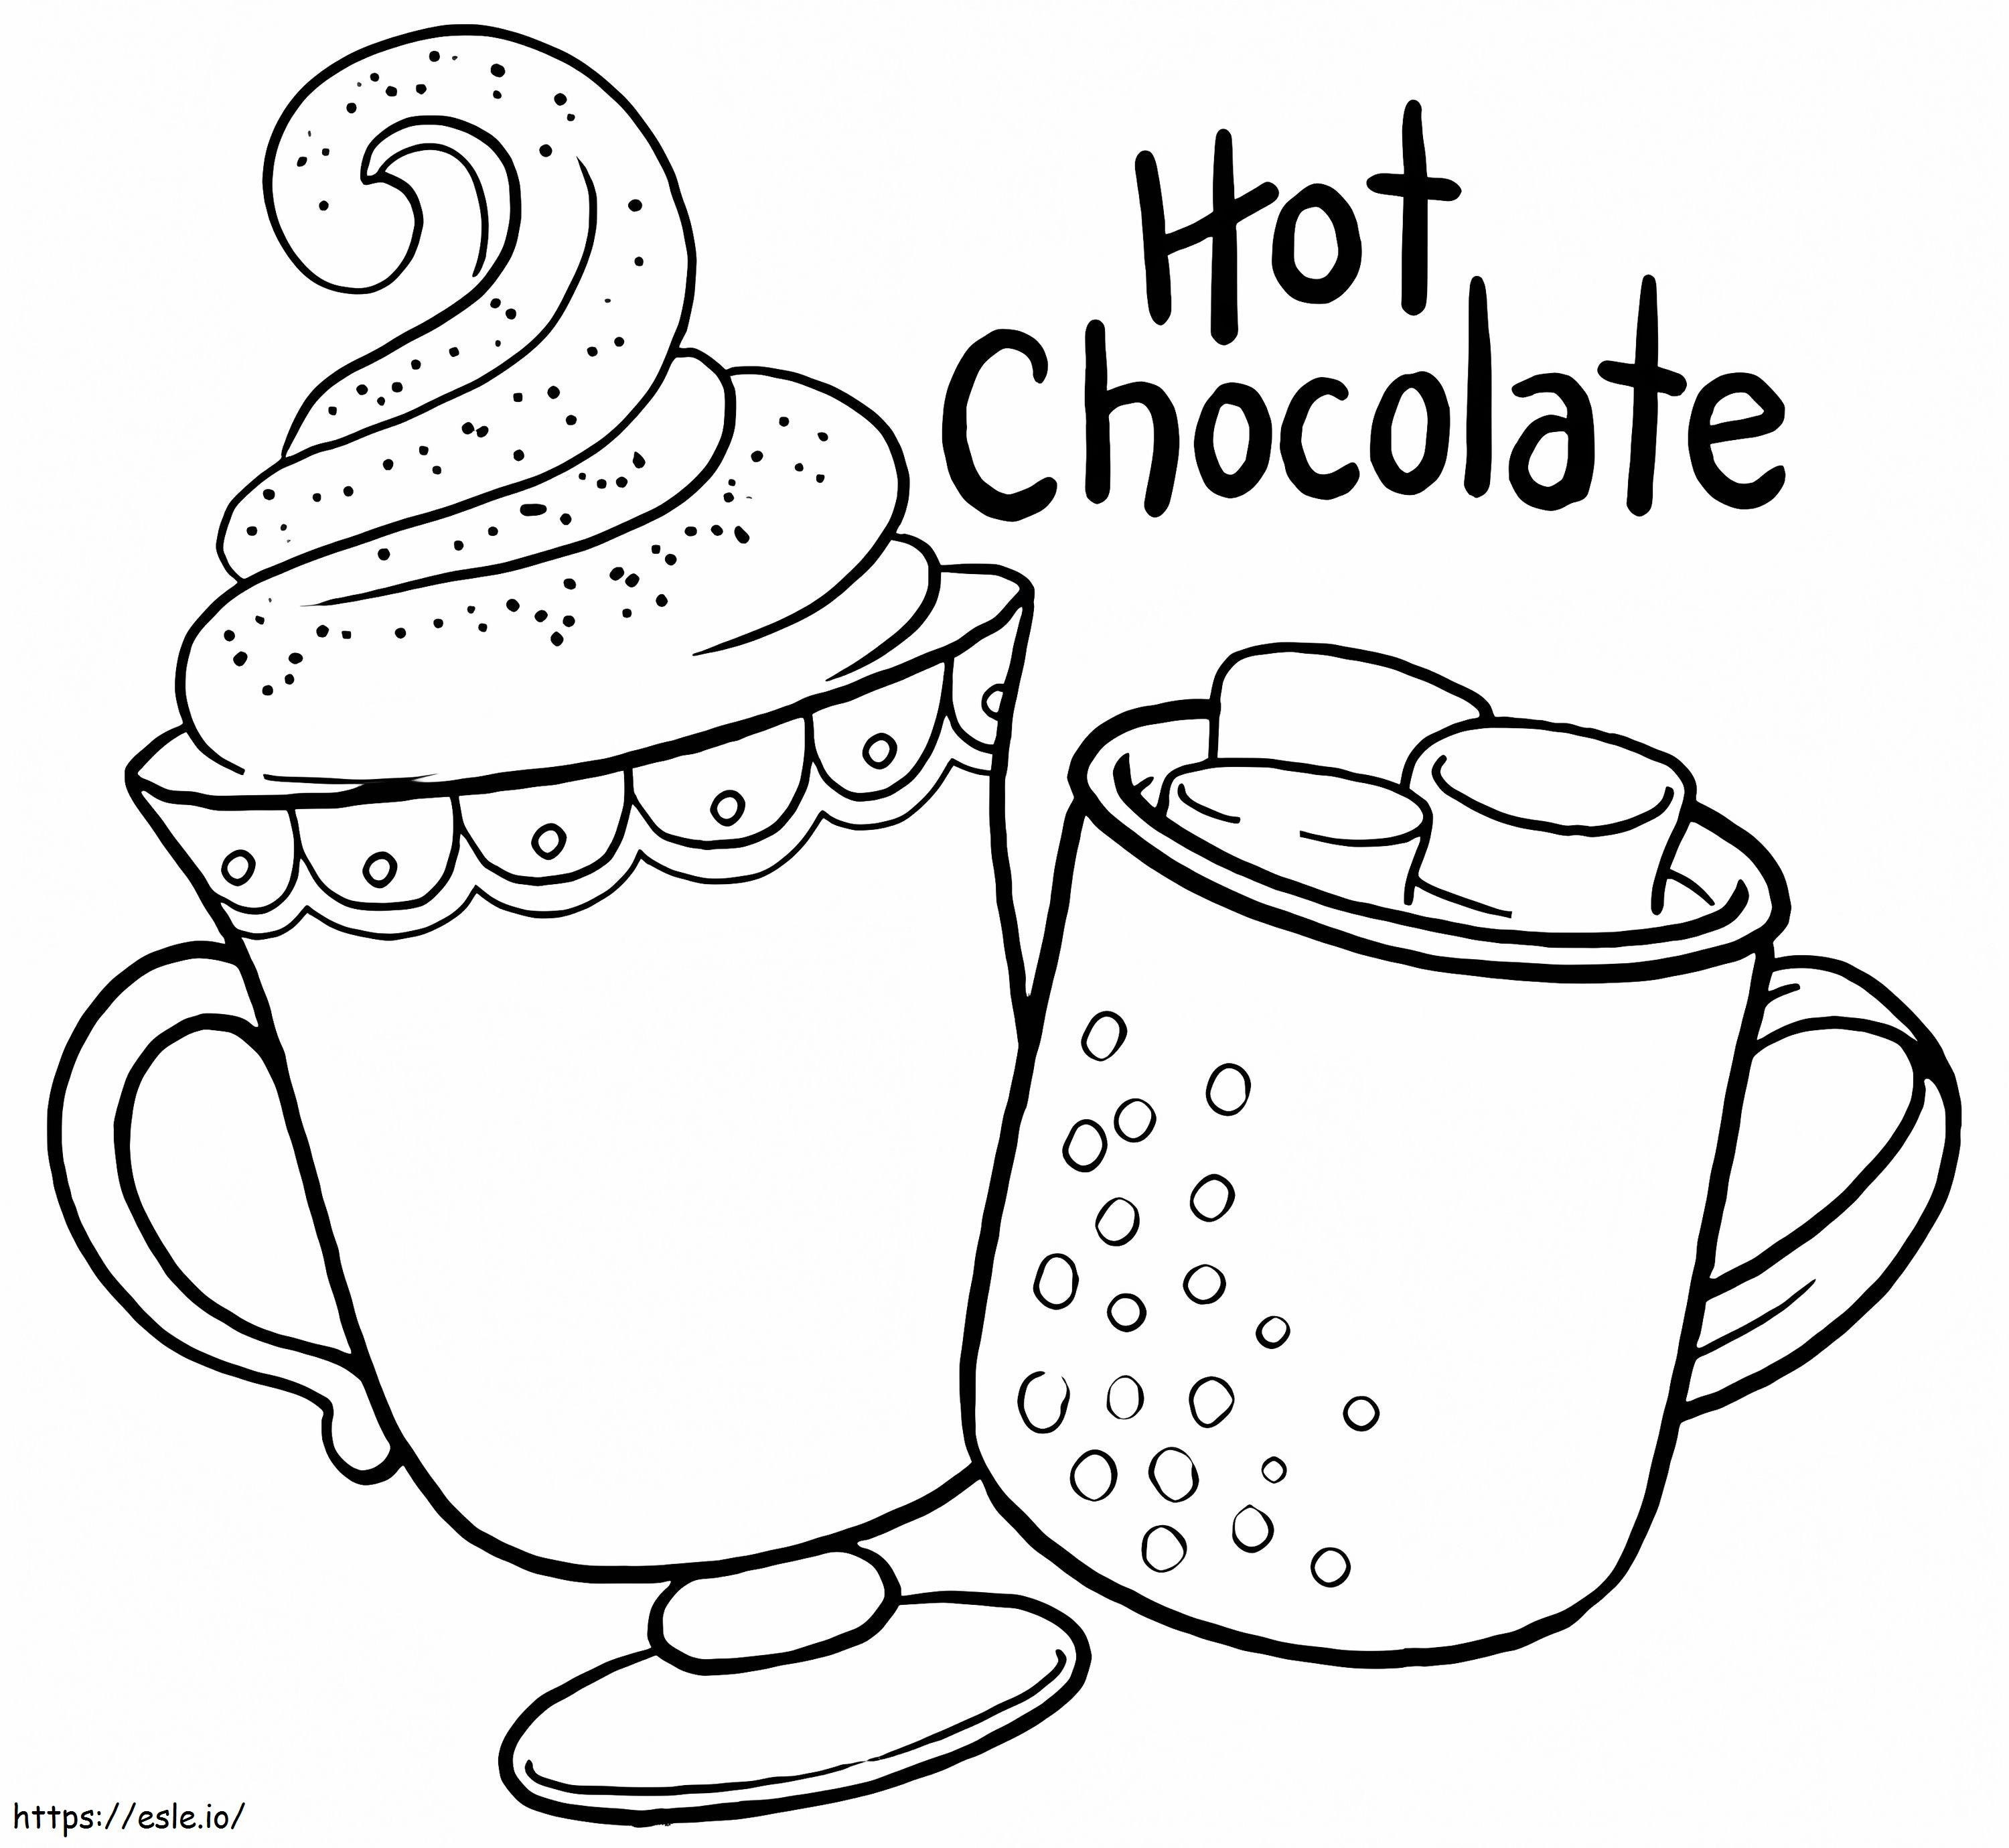 Xmas Hot Chocolate coloring page